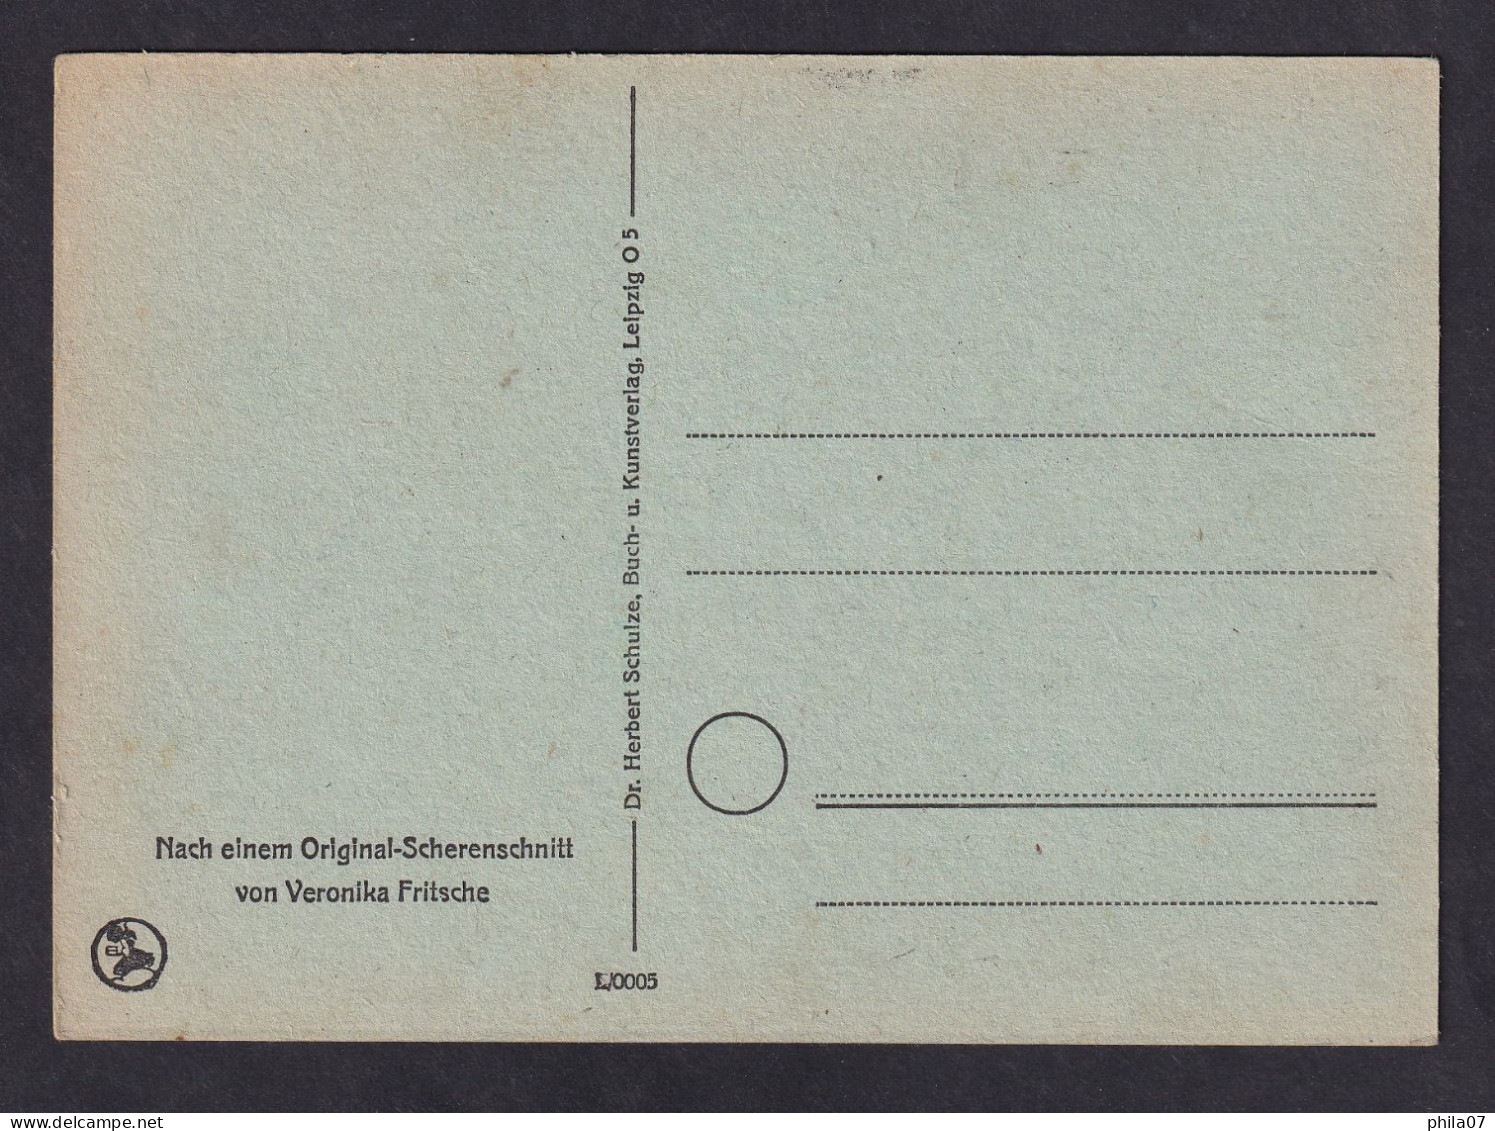 Herzlichen Gluckwunsch - Girl And Dog / Postcard Not Circulated, 2 Scans - Silhouette - Scissor-type